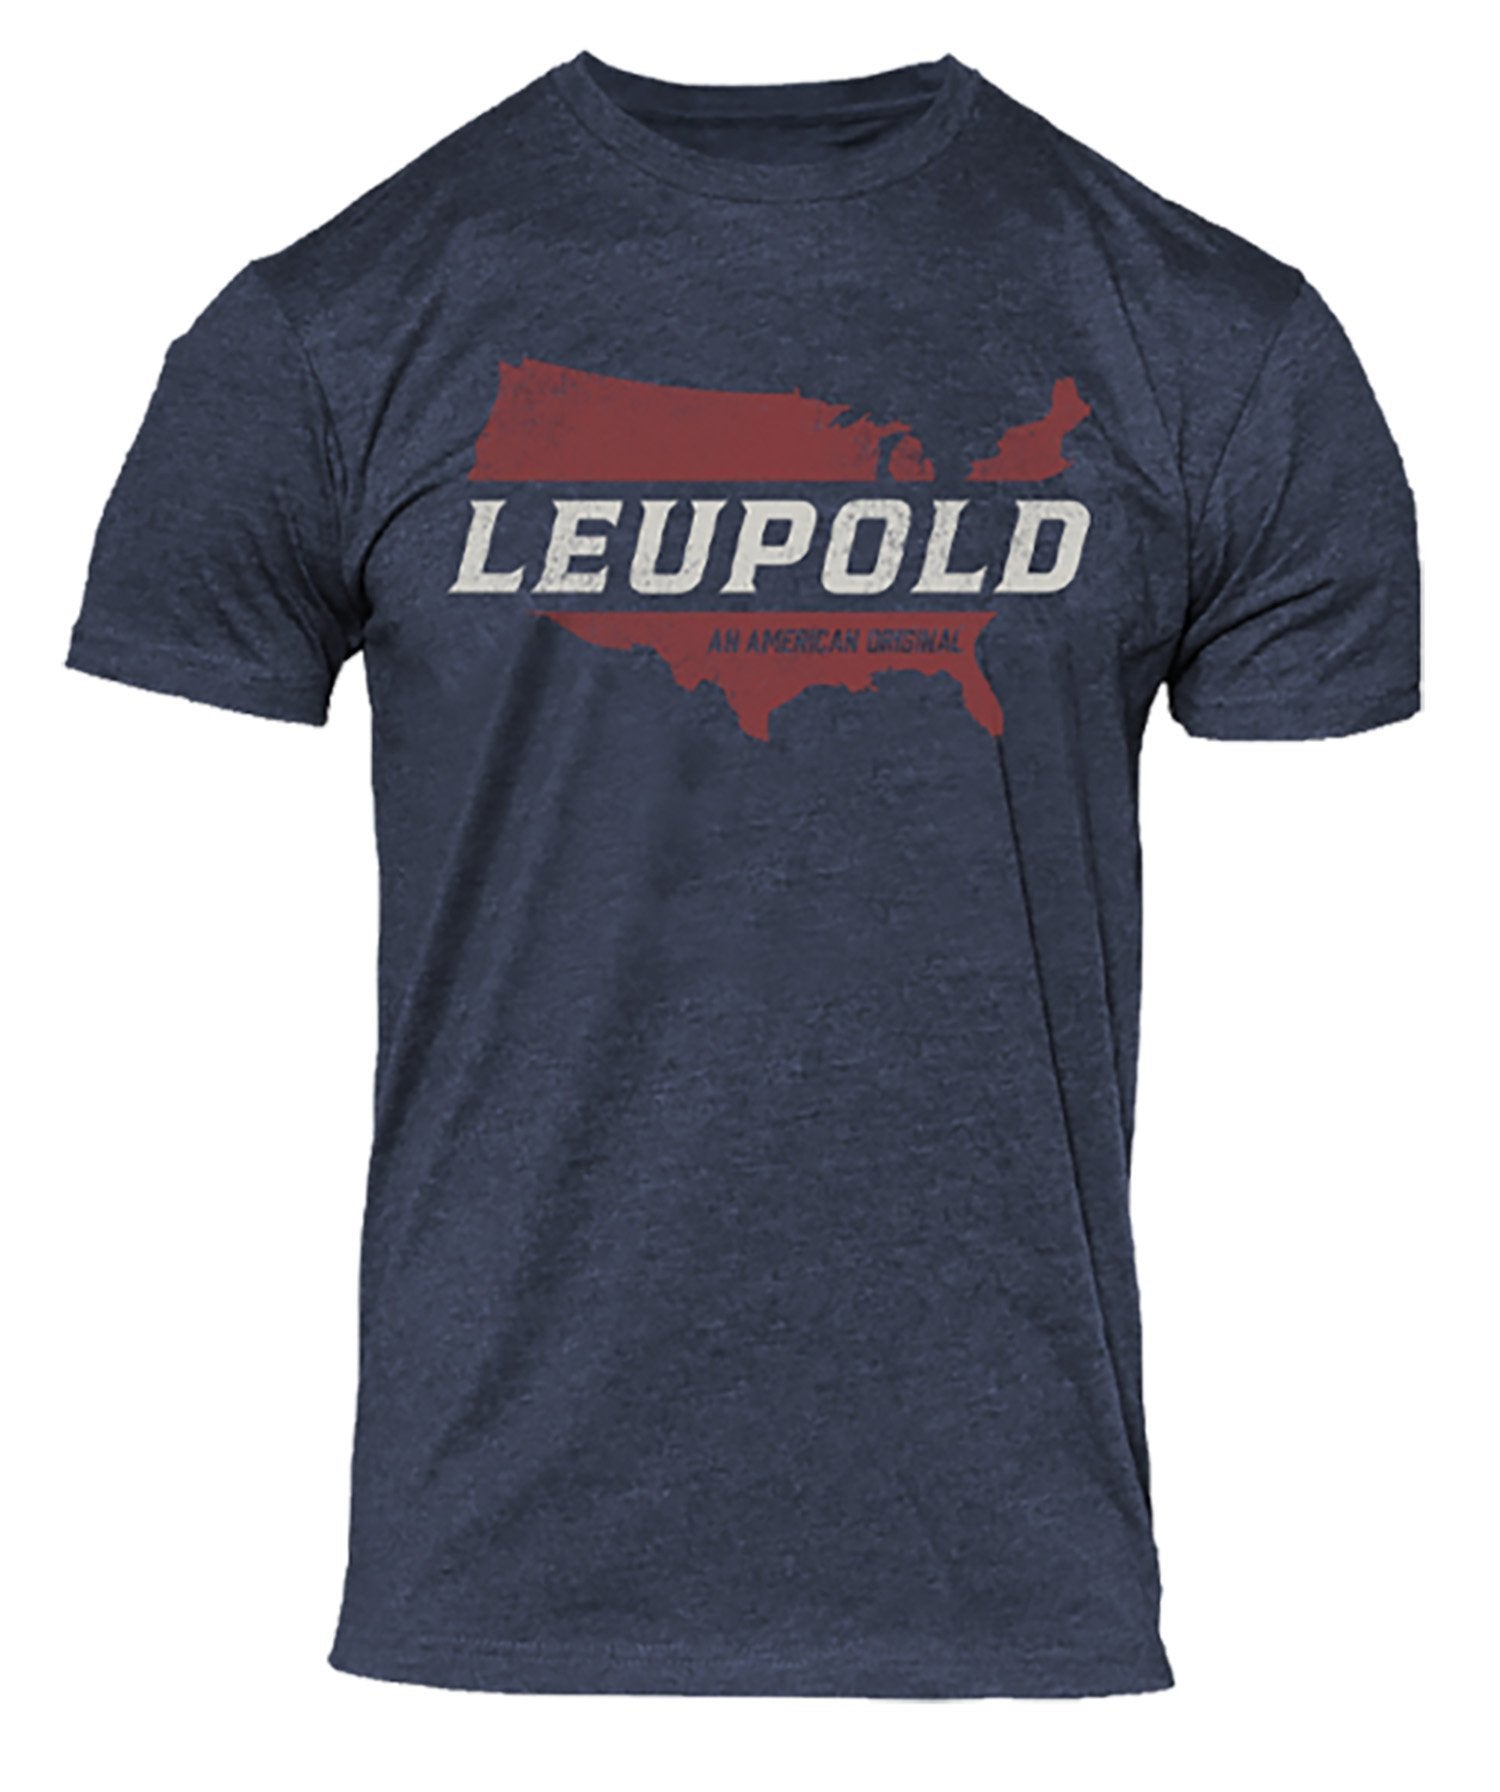 Leupold American Original T-Shirt Navy Heather Medium Short Sleeve - Pacific Flyway Supplies